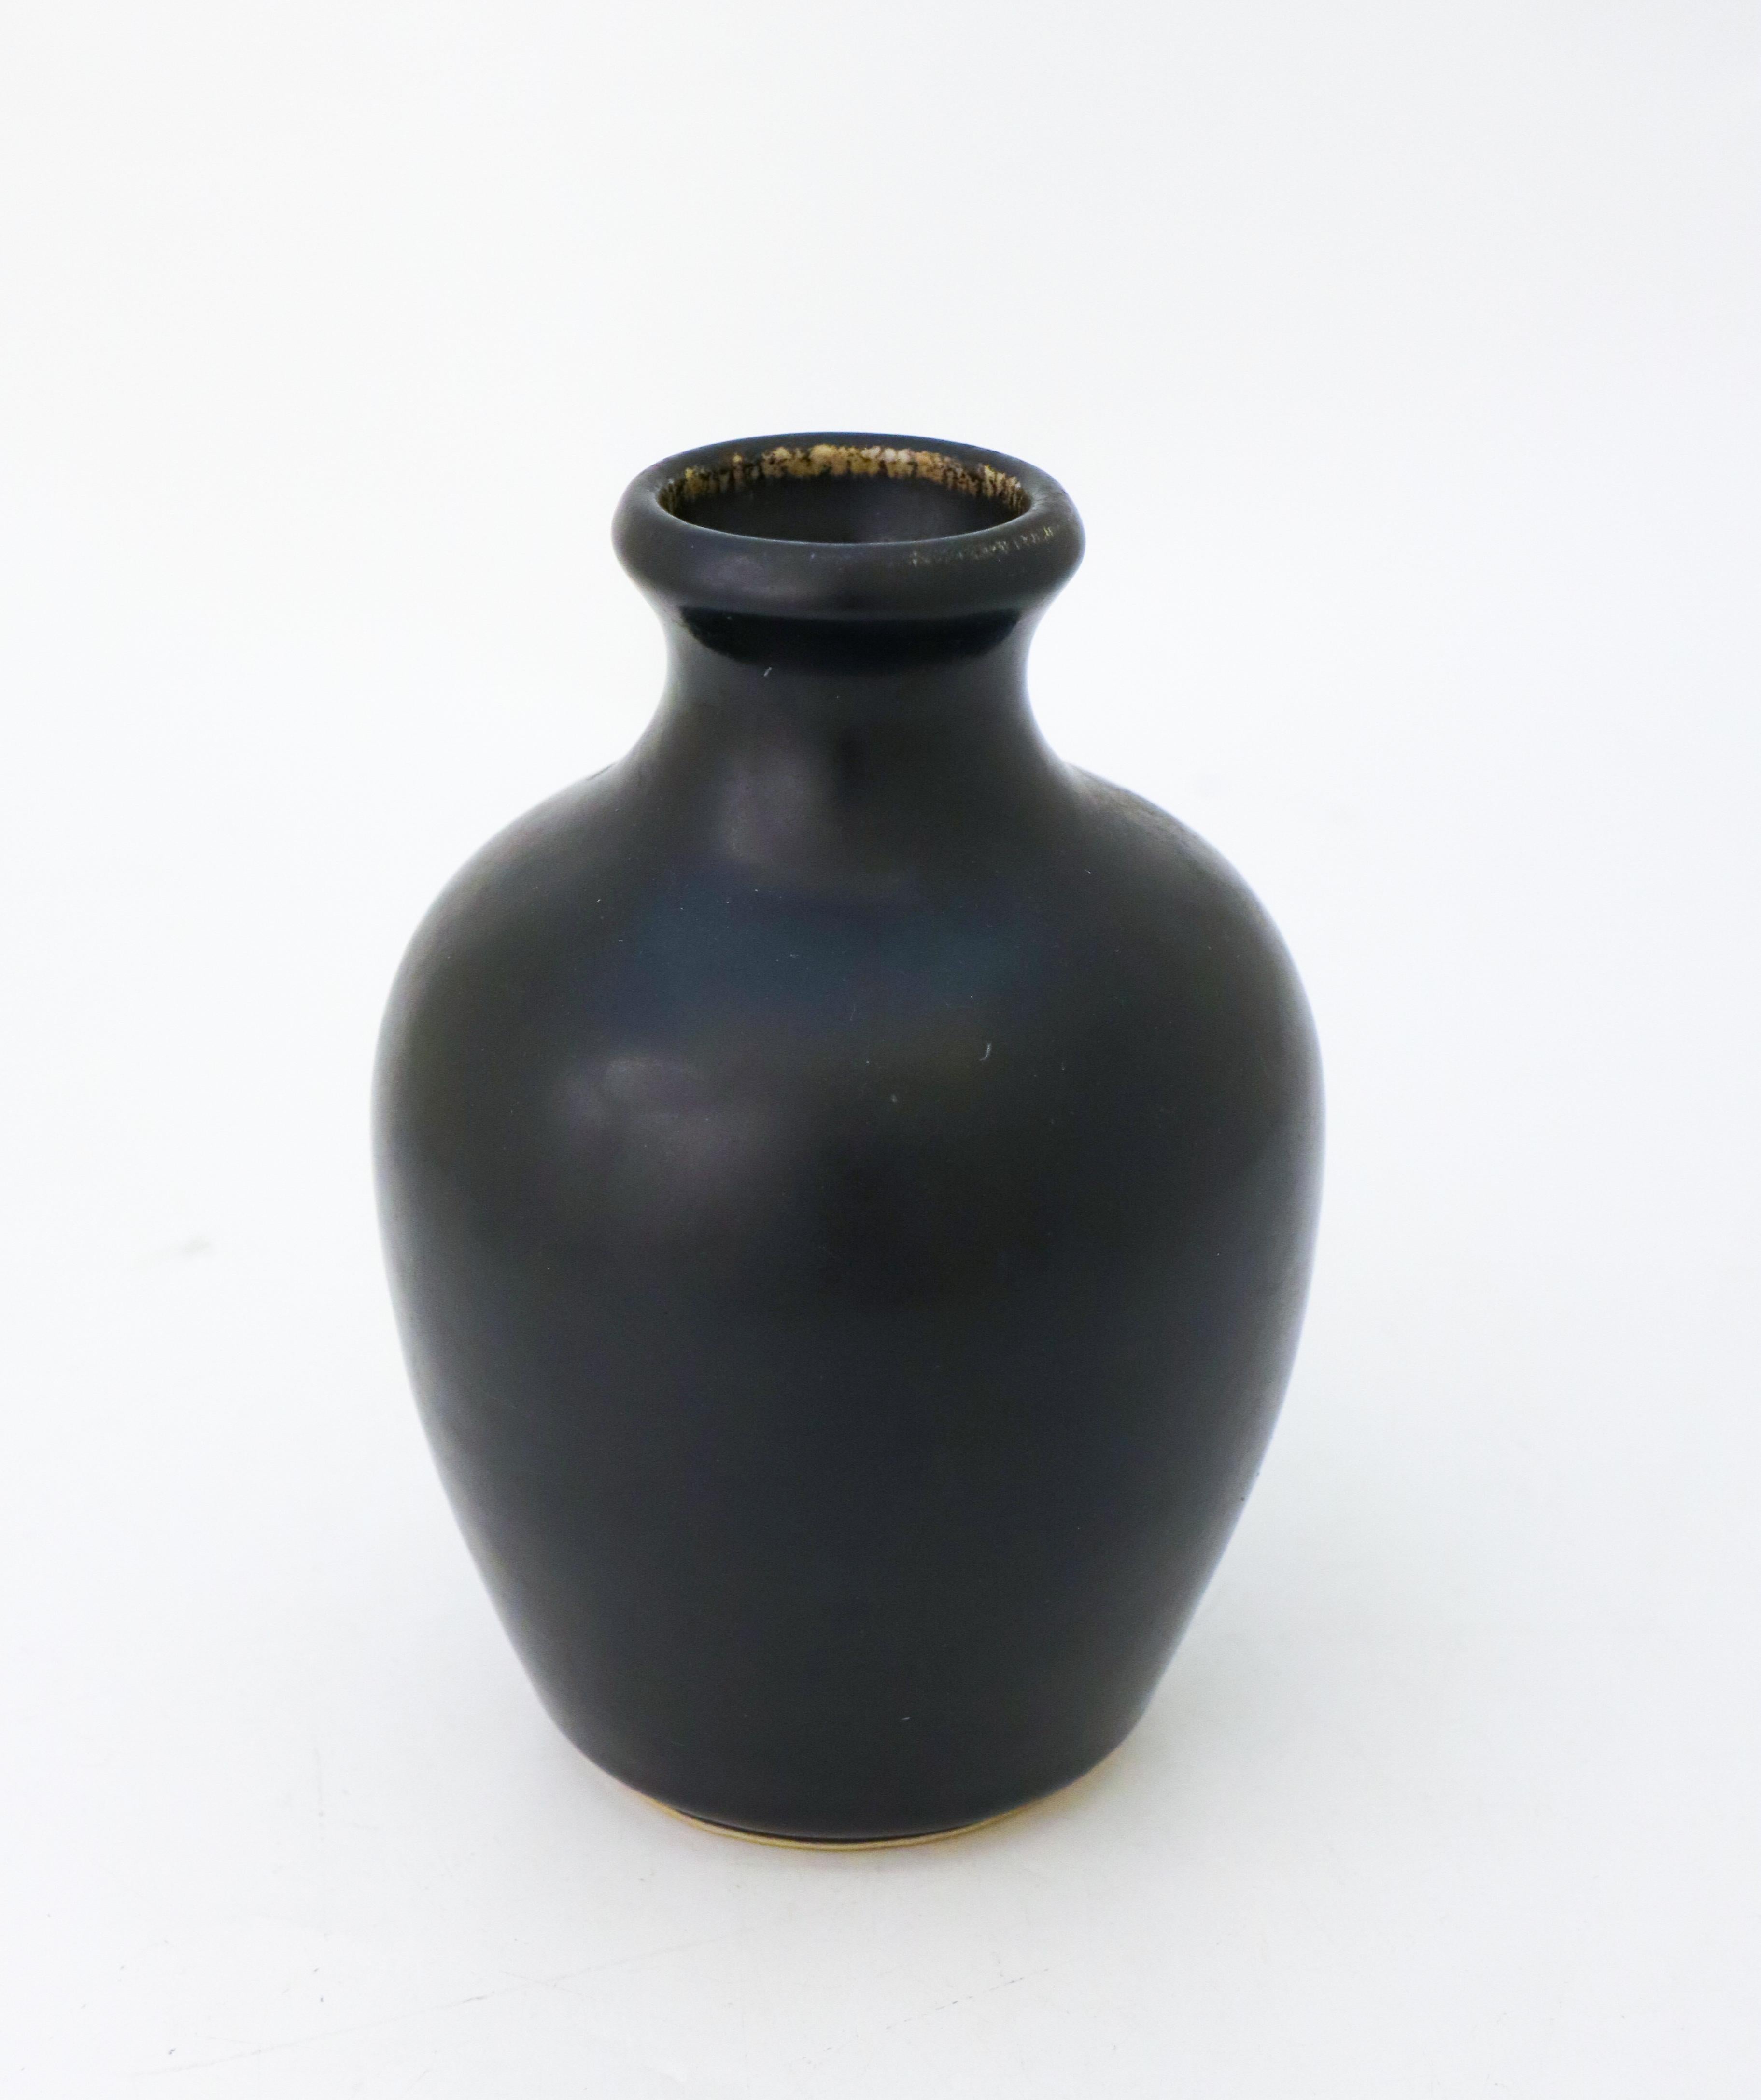 A black vase designed by Carl-Harry Stålhane at Rörstrand Atelier, it´s 16 cm (6.4